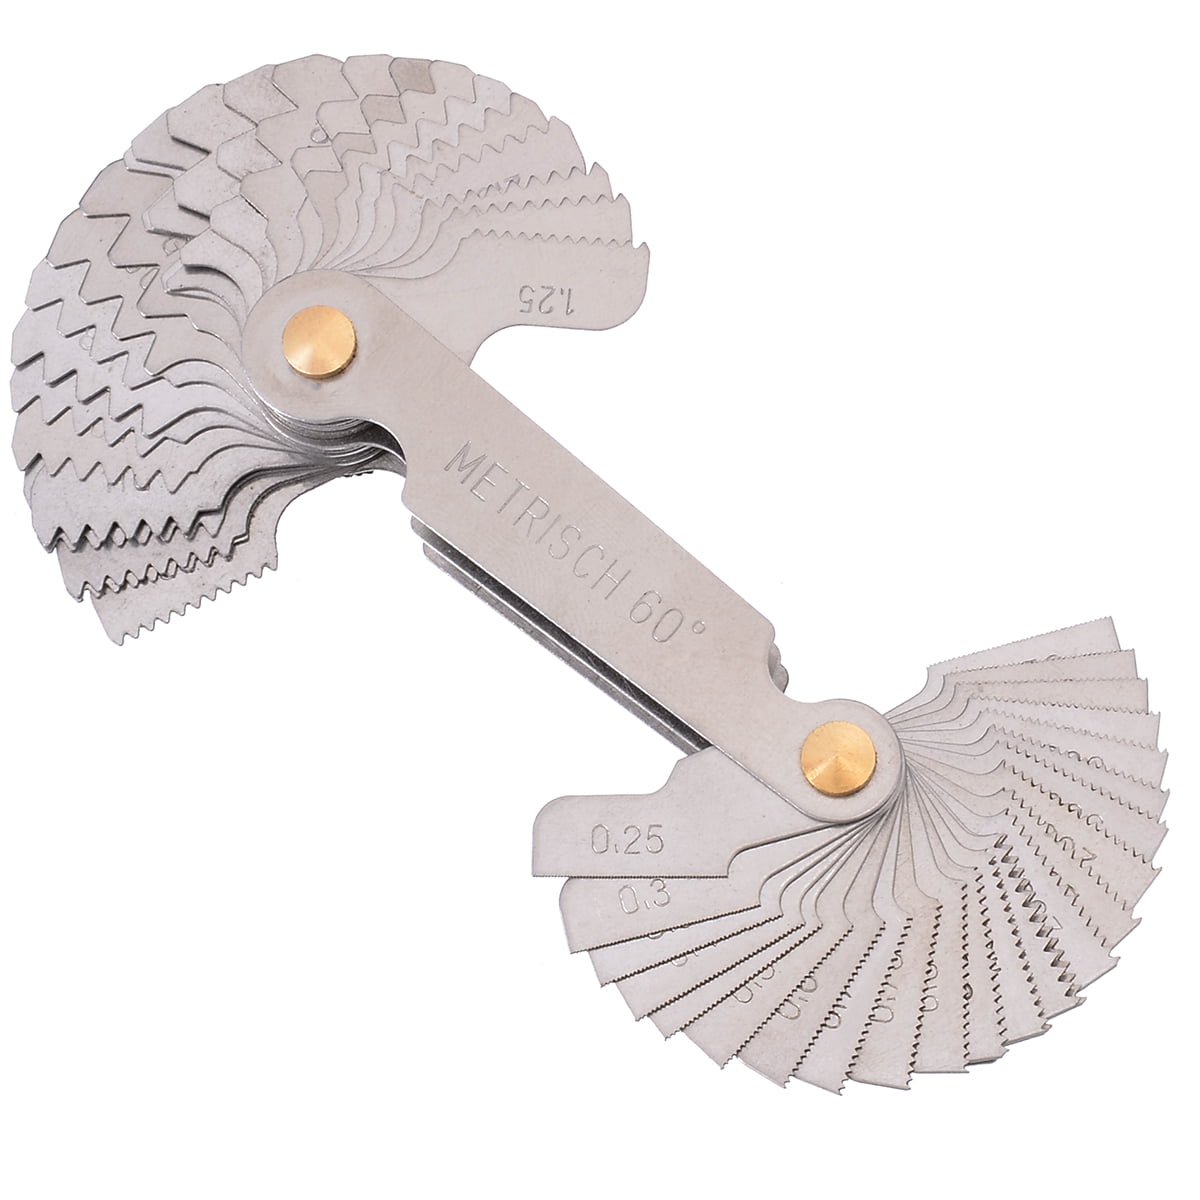 Silver Thread Gage Blades 60 Degree Screw Pitch Cutting Gauge Measuring Tool 1pc 